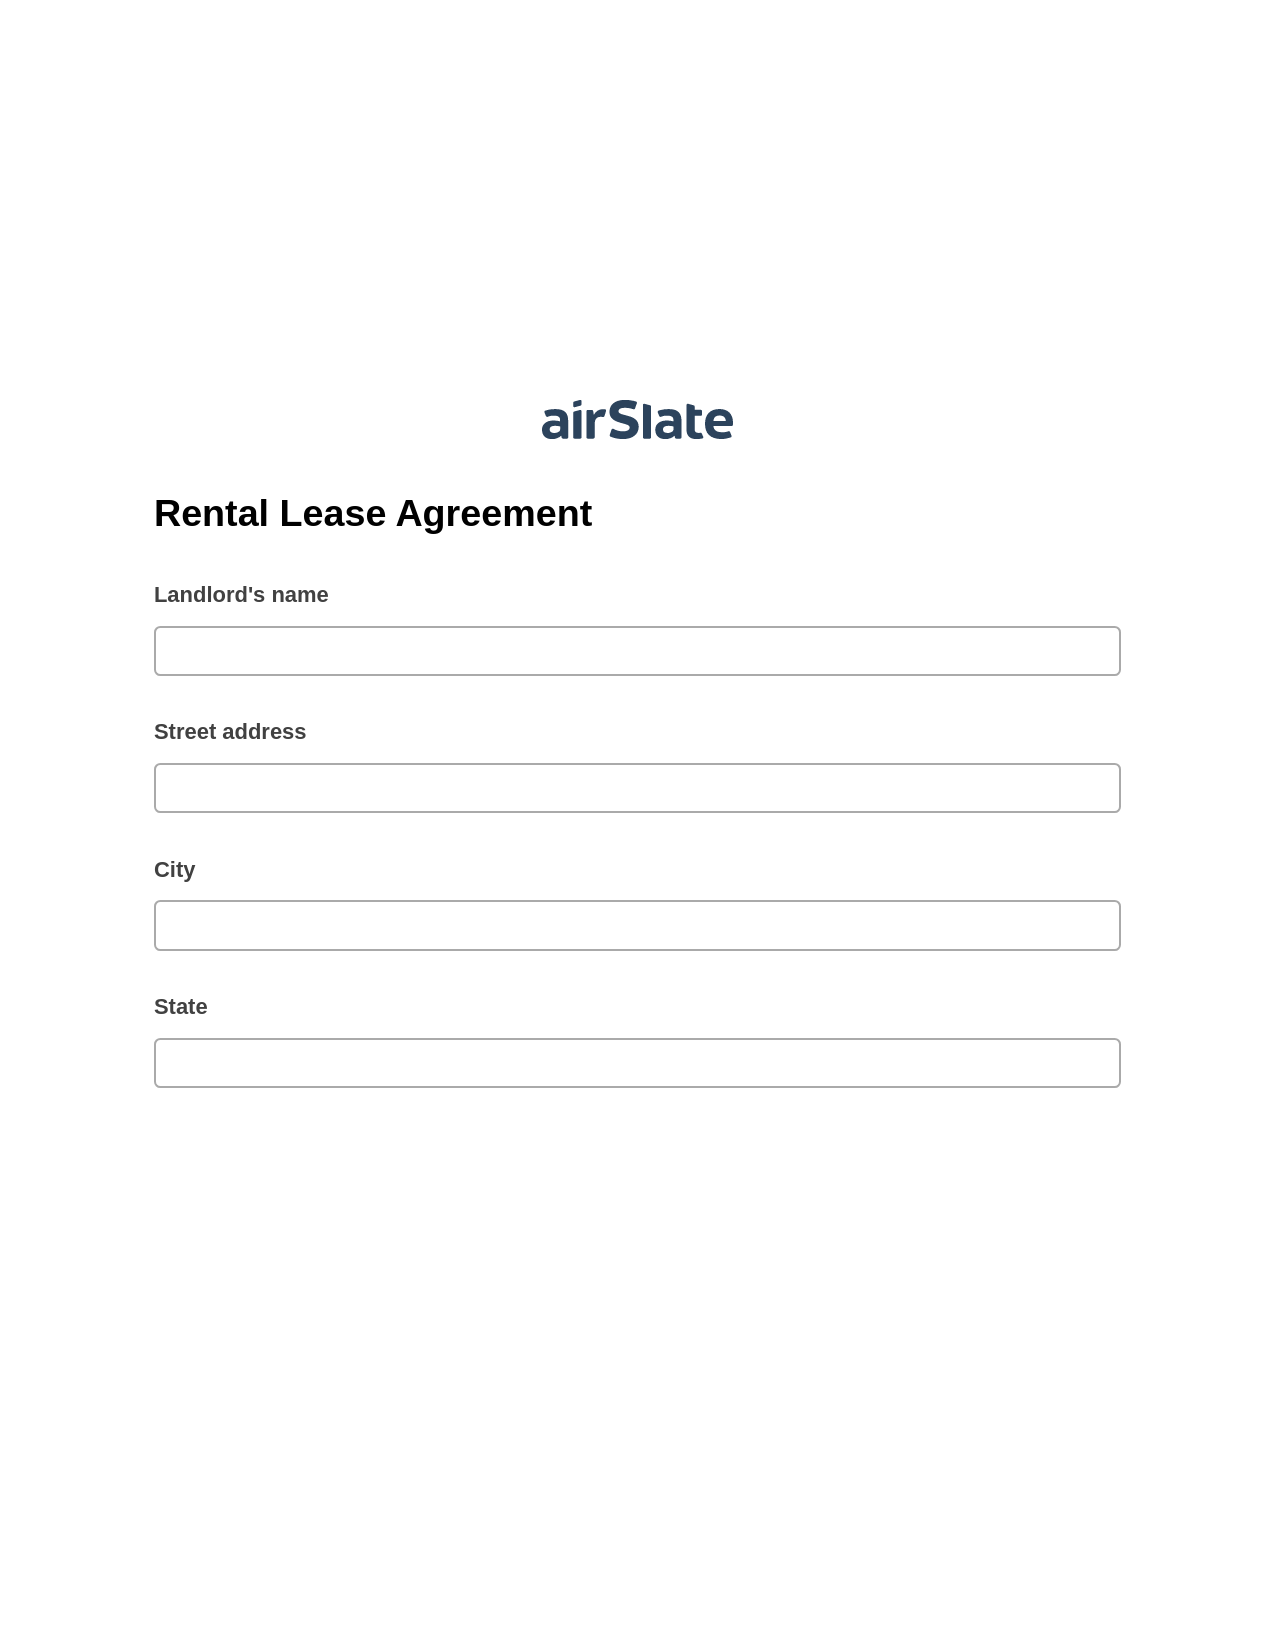 Rental Lease Agreement Pre-fill from Google Sheets Bot, Document Hide Bot, Slack Notification Postfinish Bot